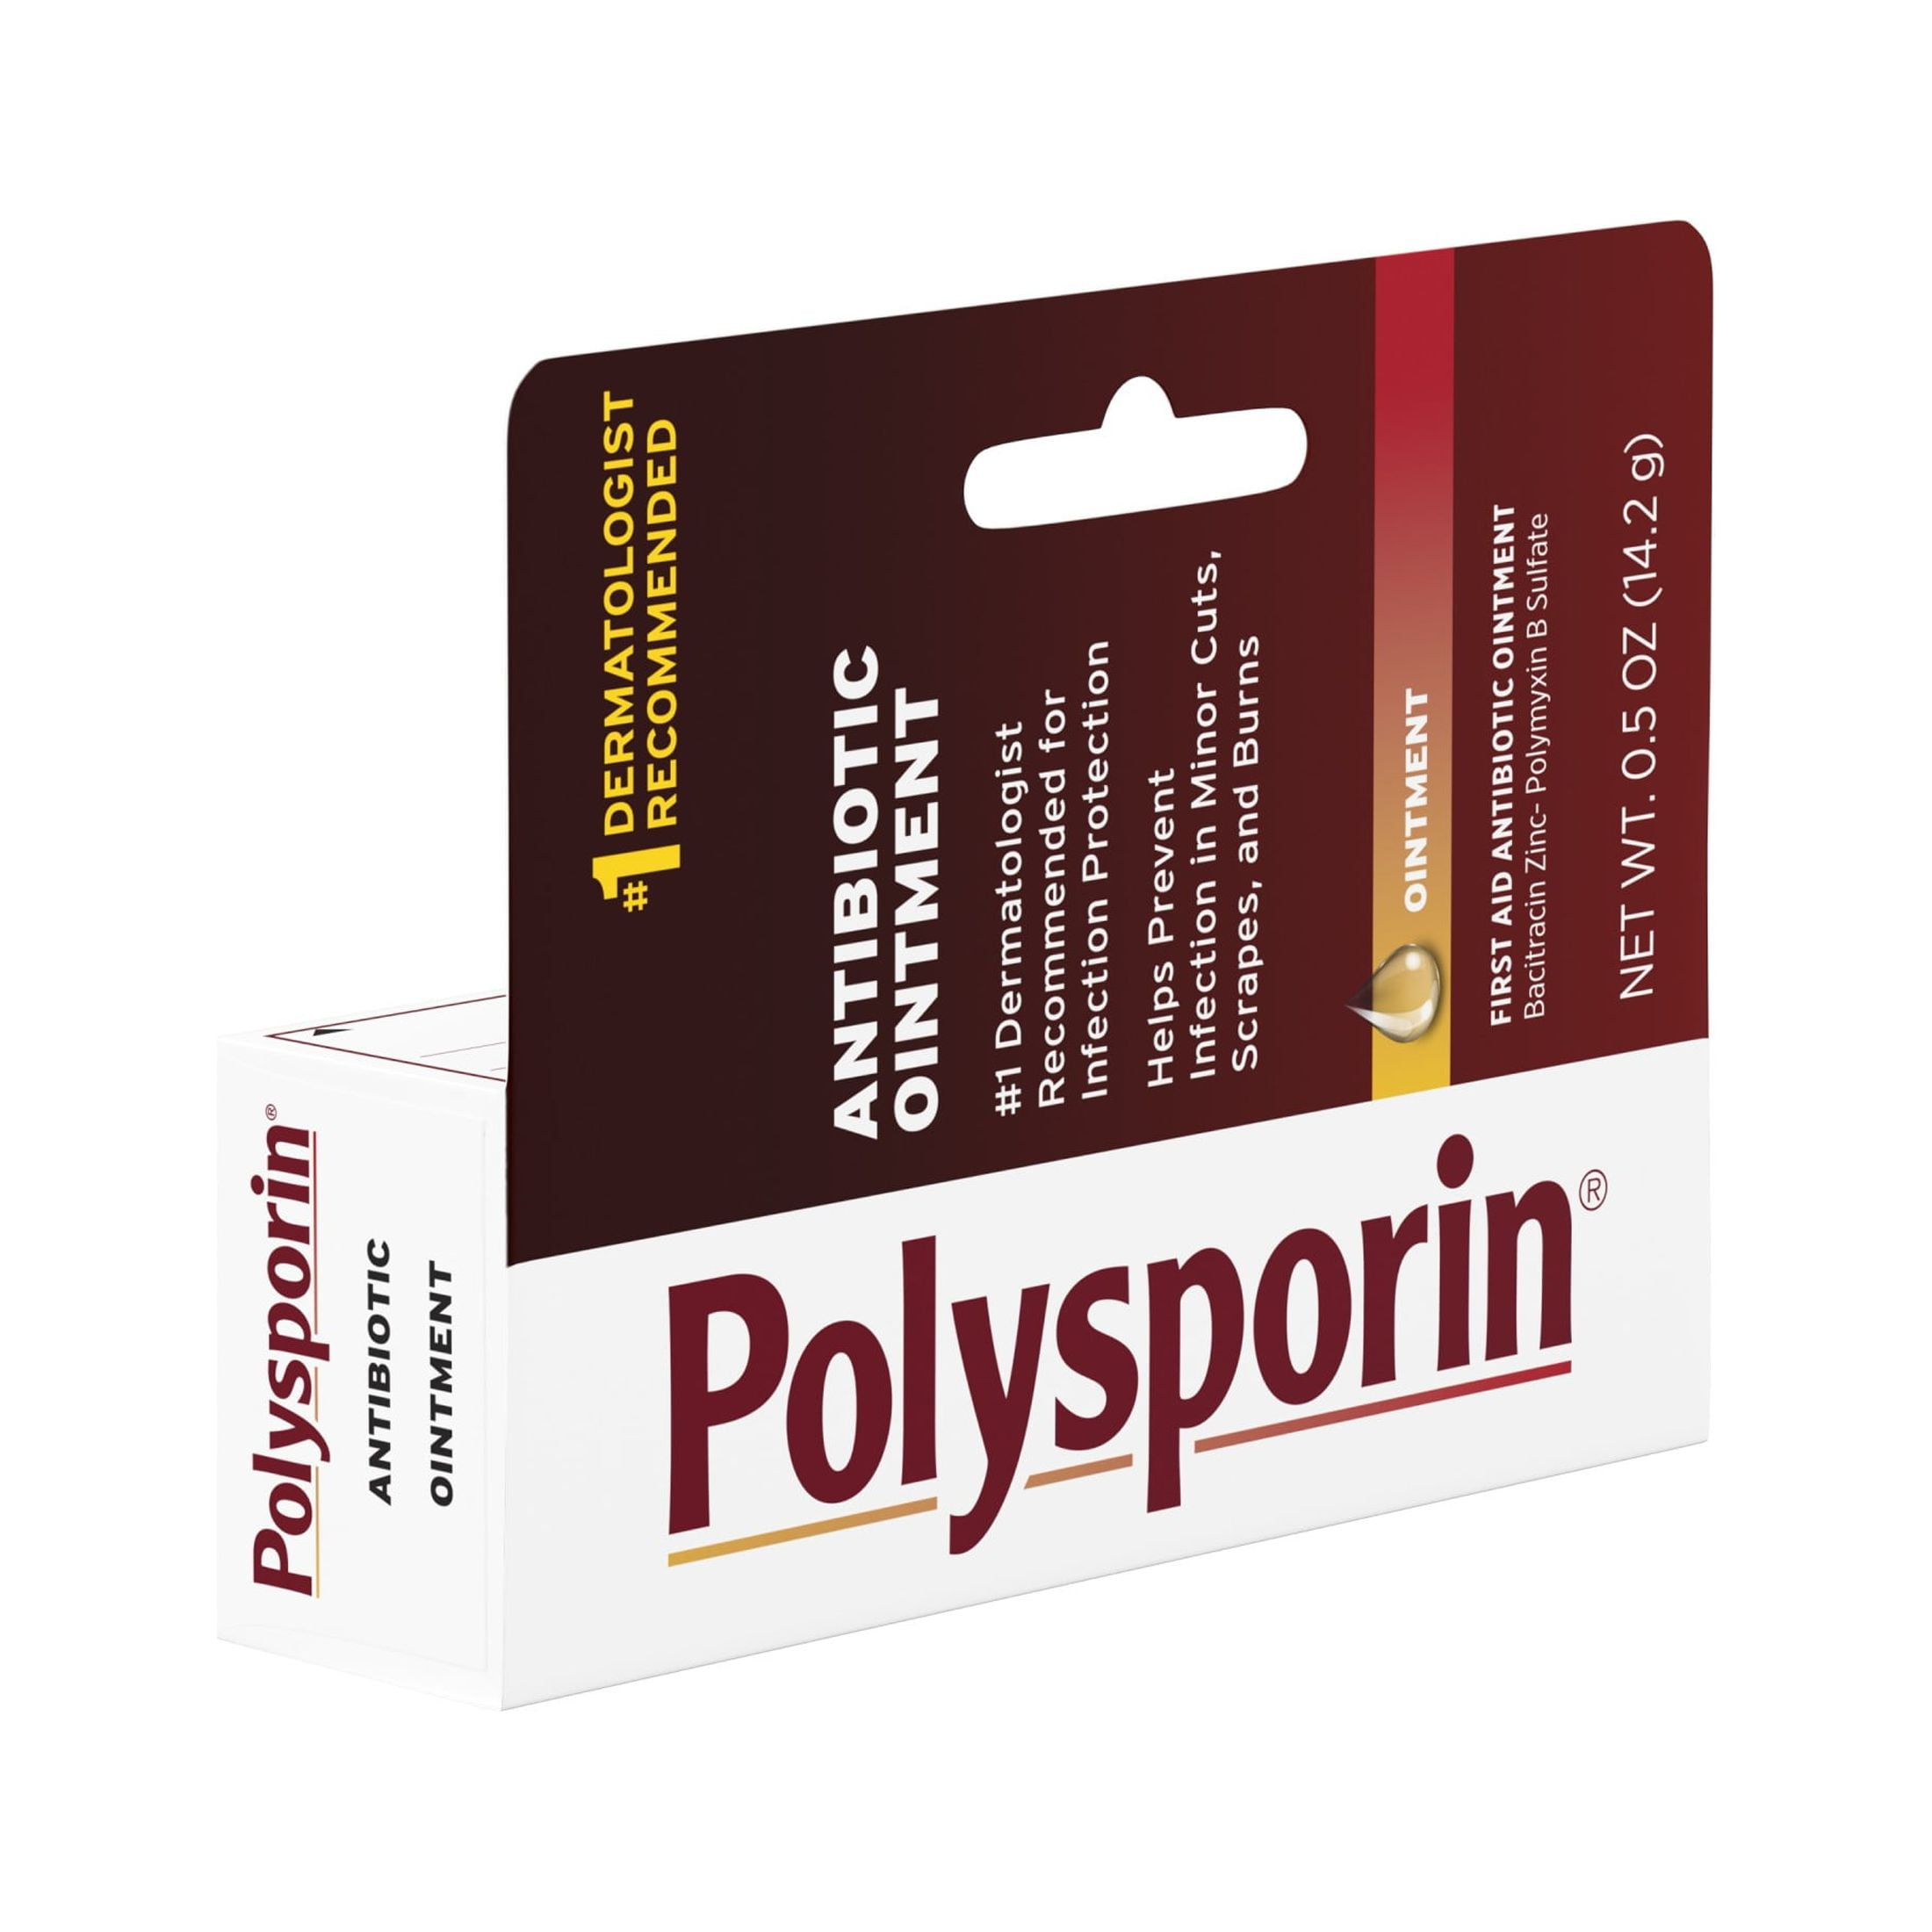 Polysporin First Aid Topical Antibiotic